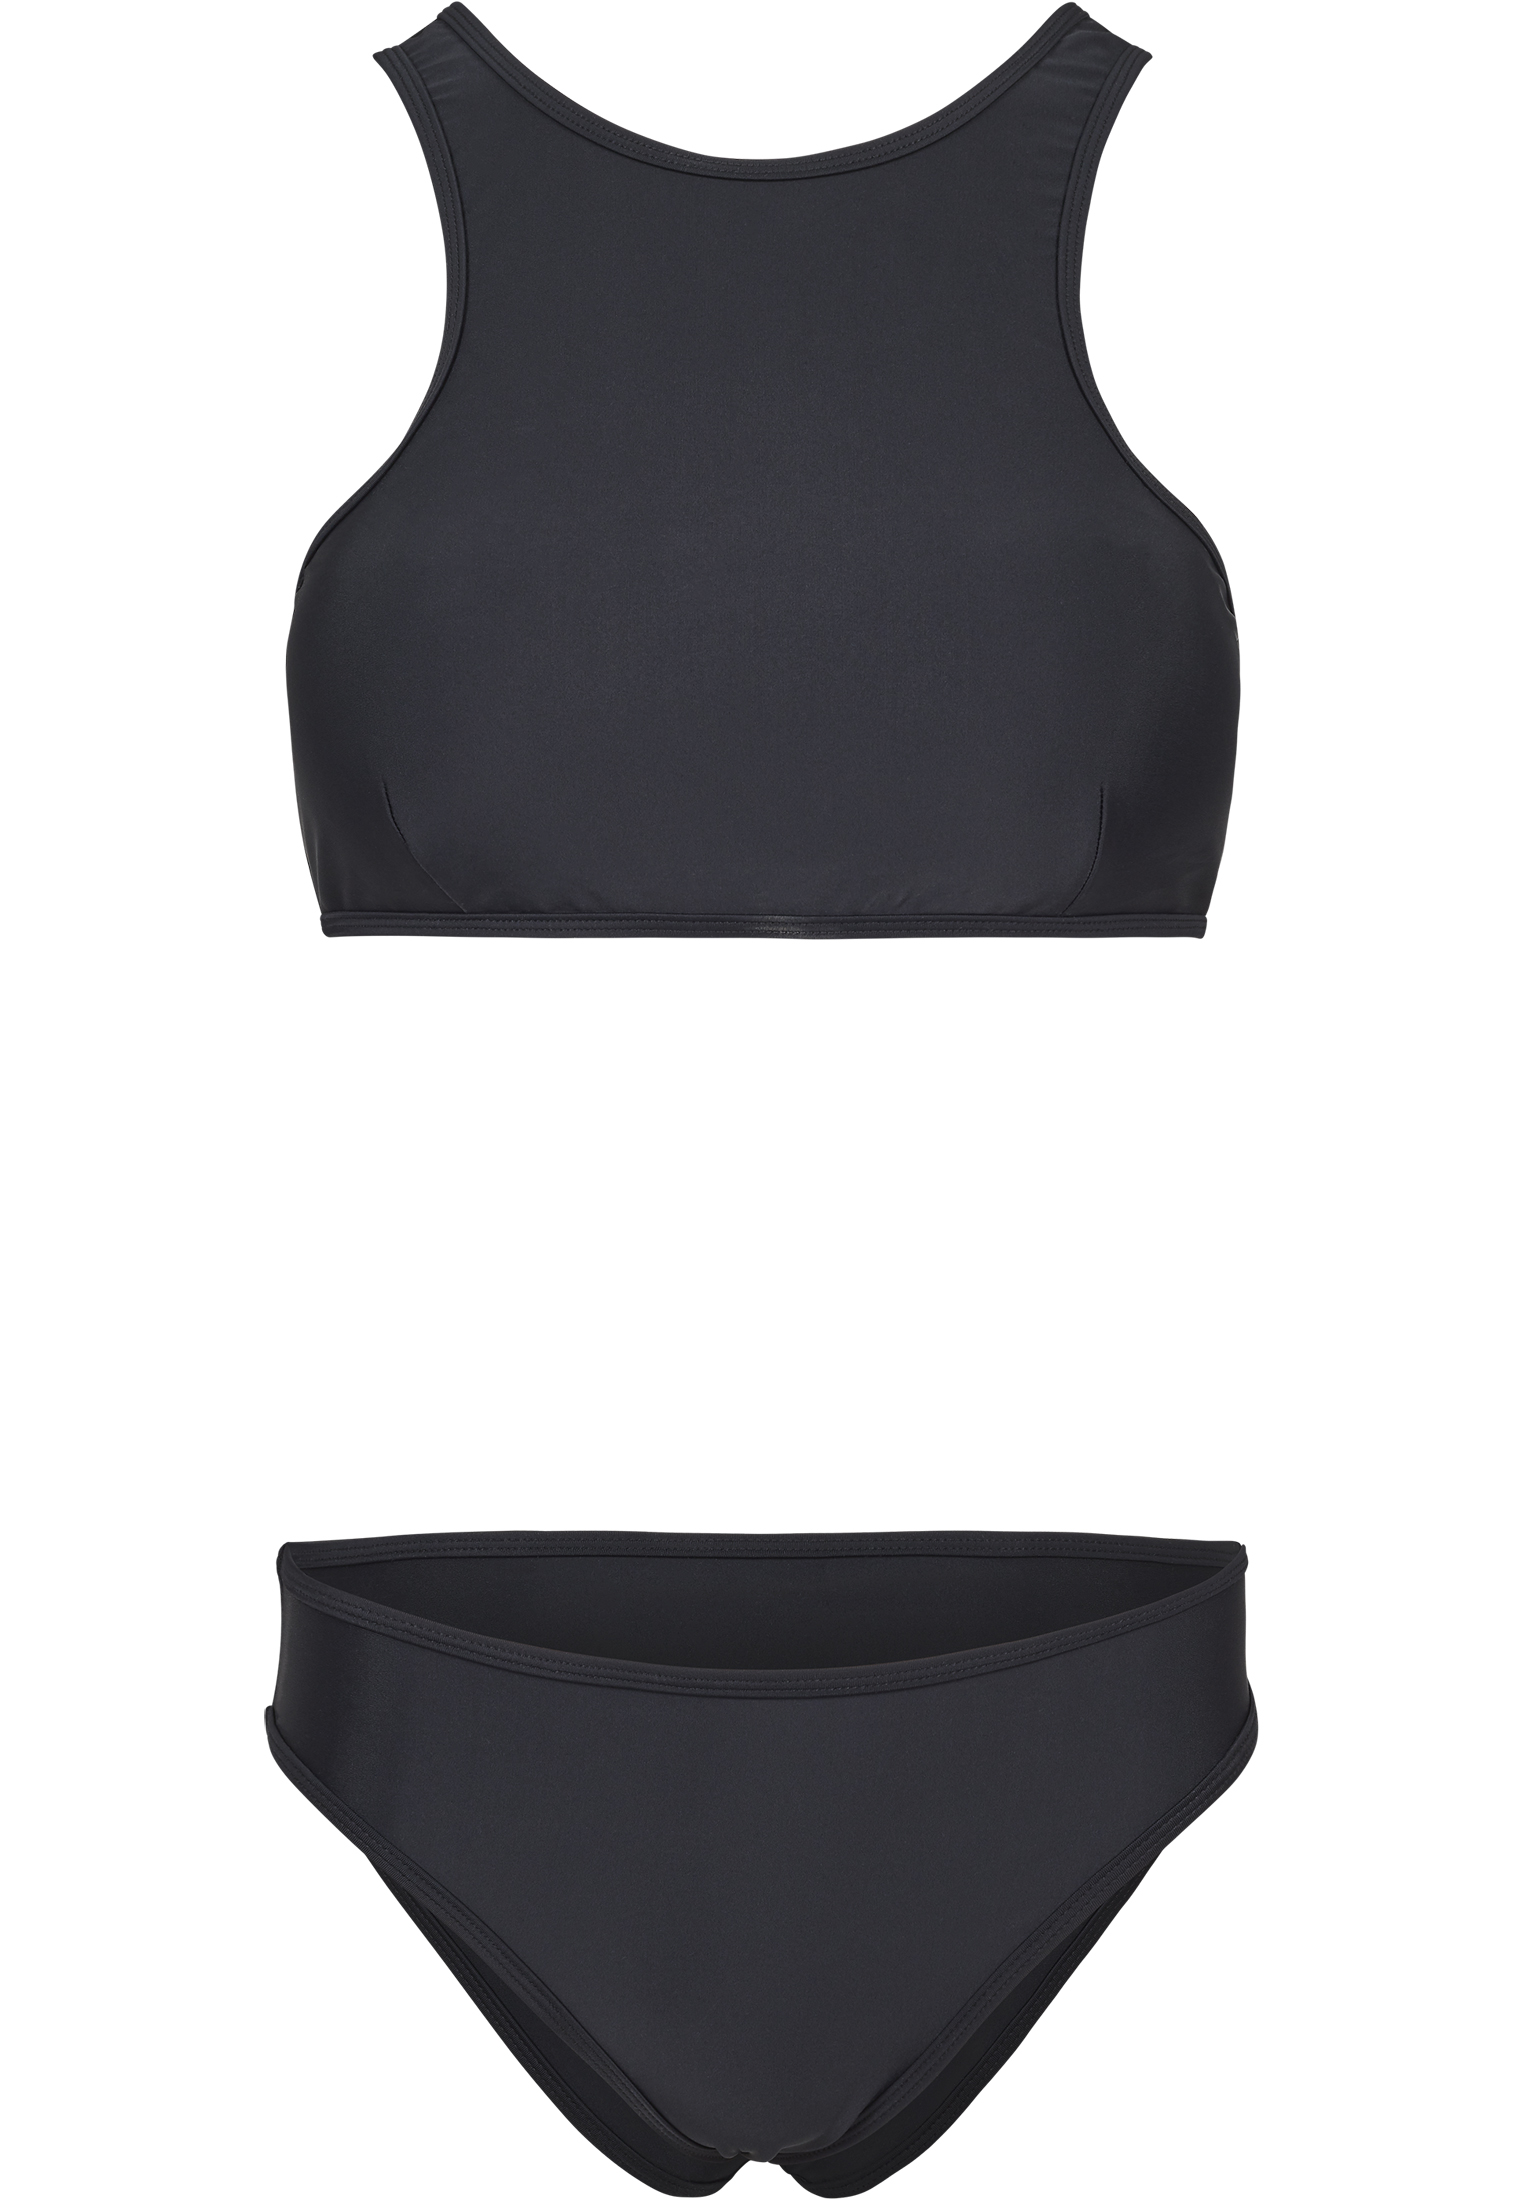 Bademode Ladies Surf Bikini in Farbe black